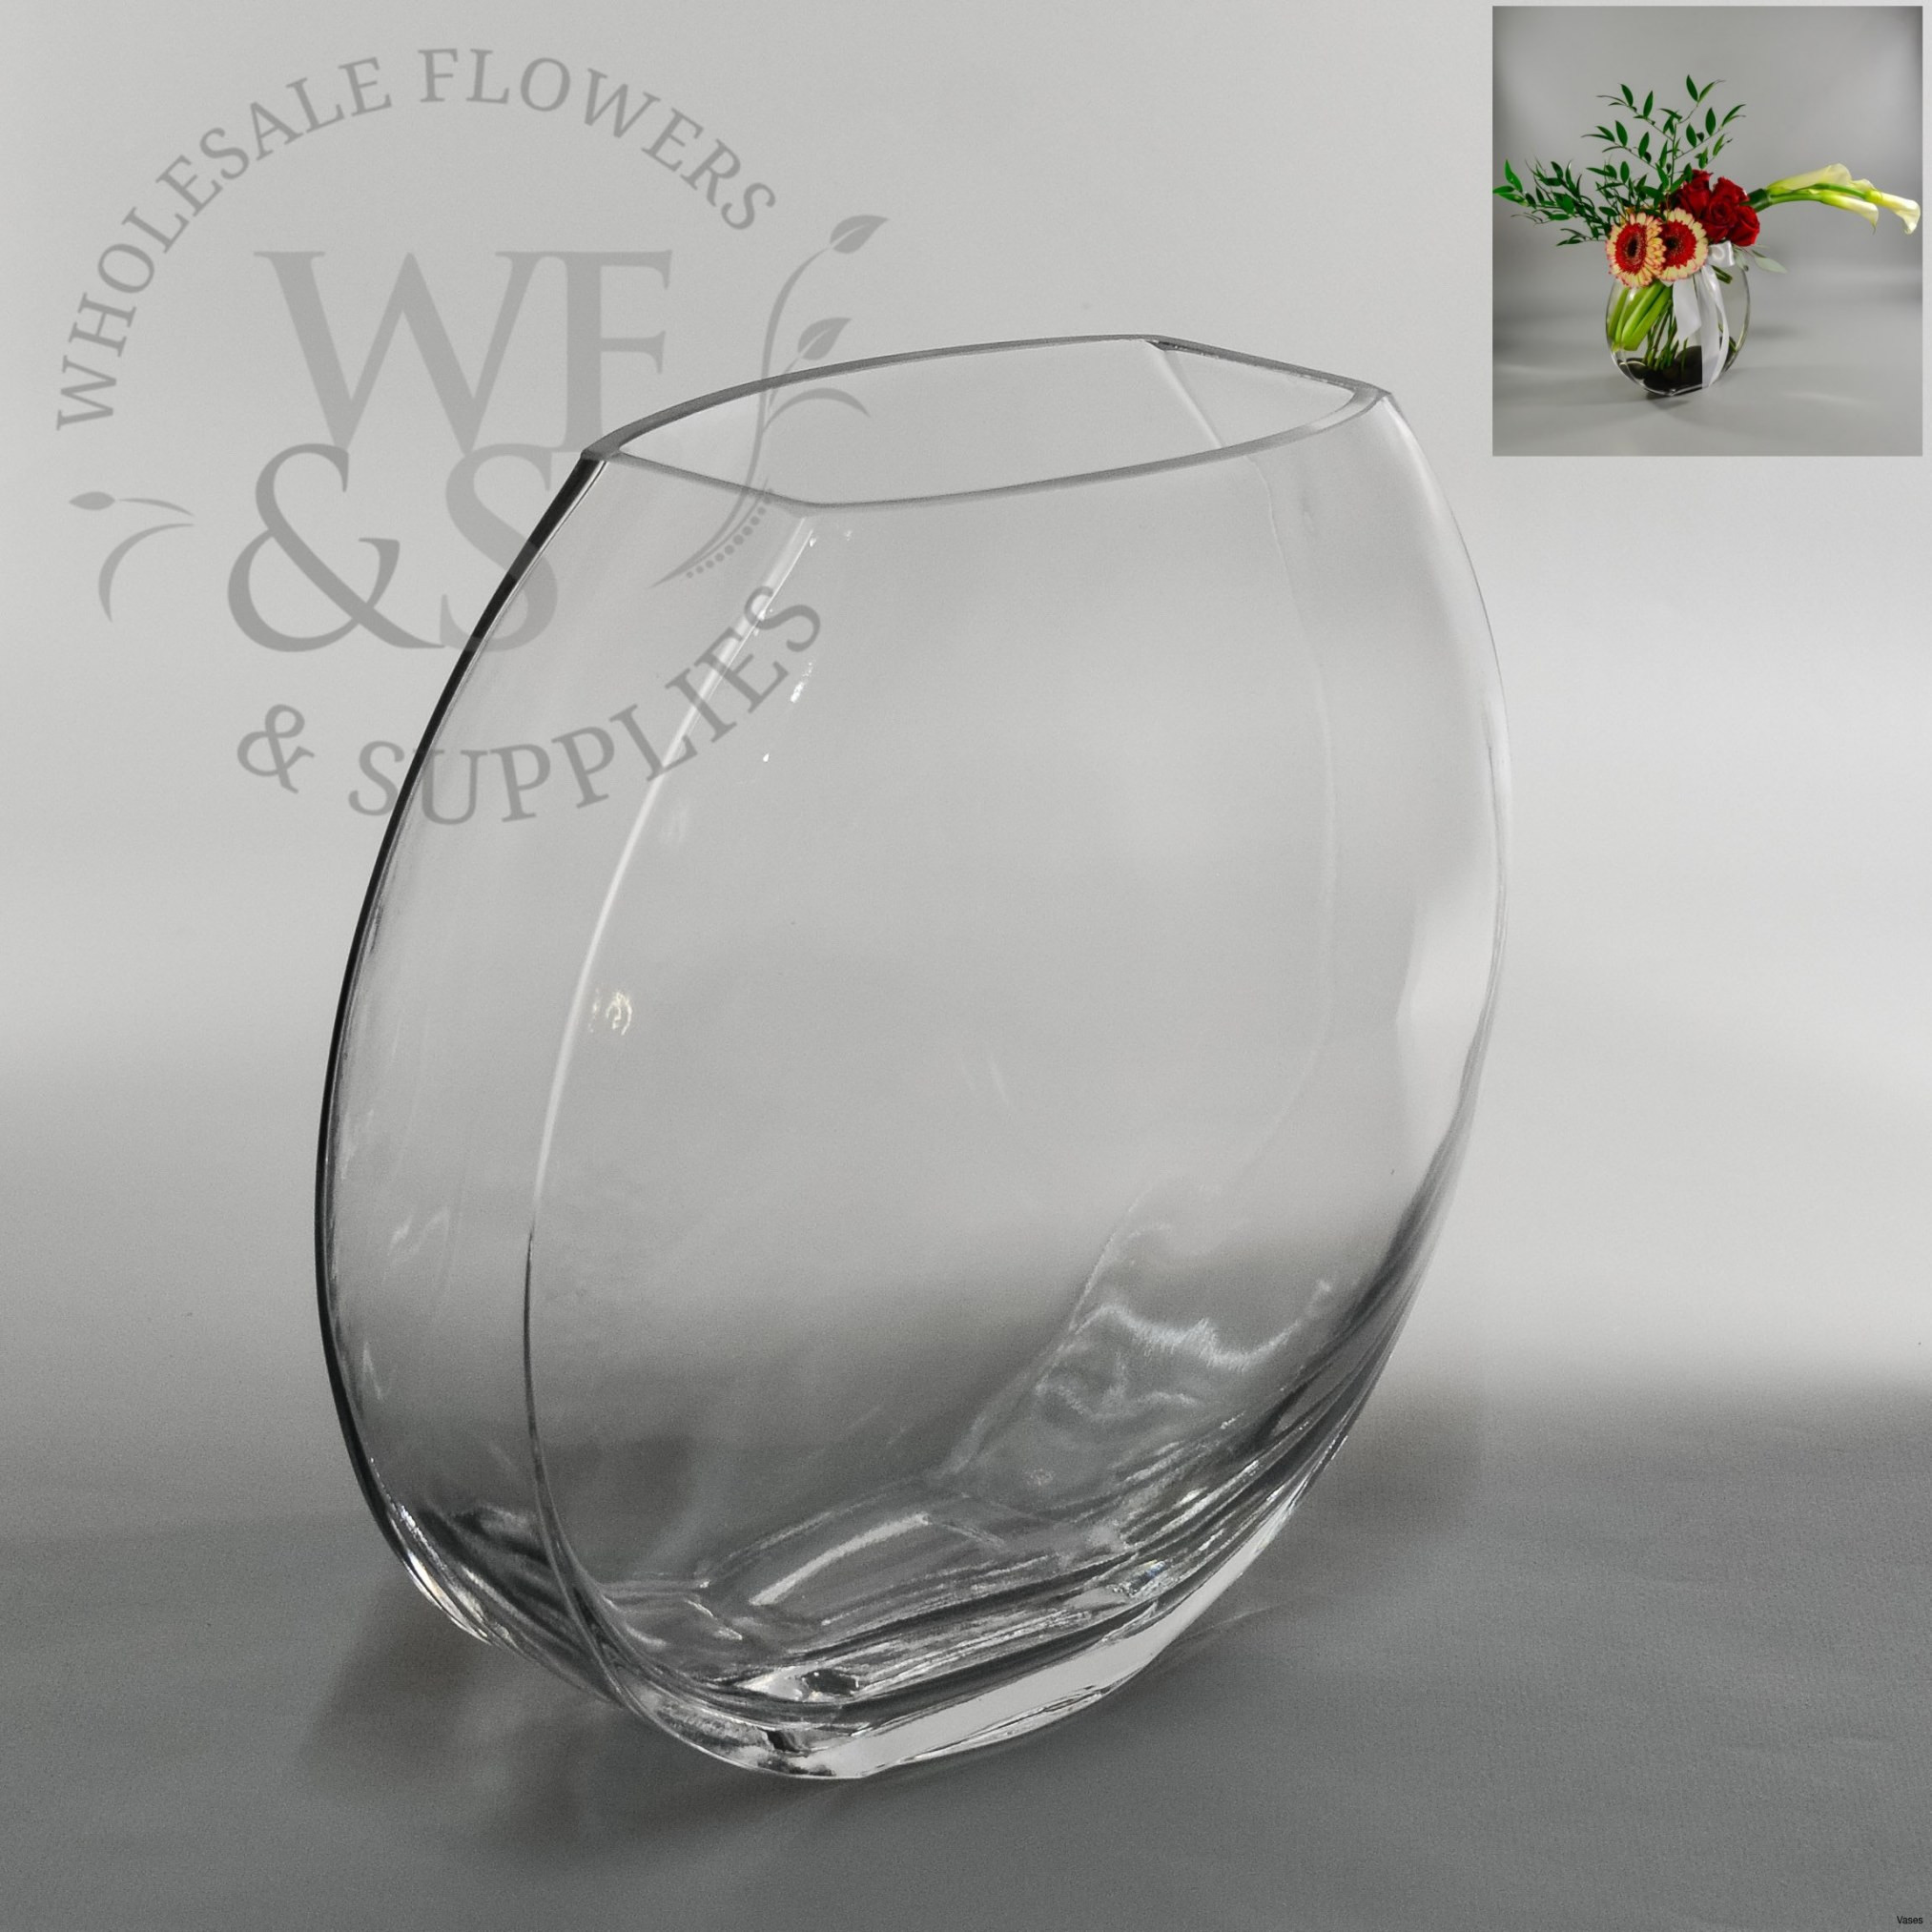 blenko green glass vase of glass fish vases image glass fish bowl decoration aquarium design within glass fish bowl decoration aquarium design vbw0916 hwh vases